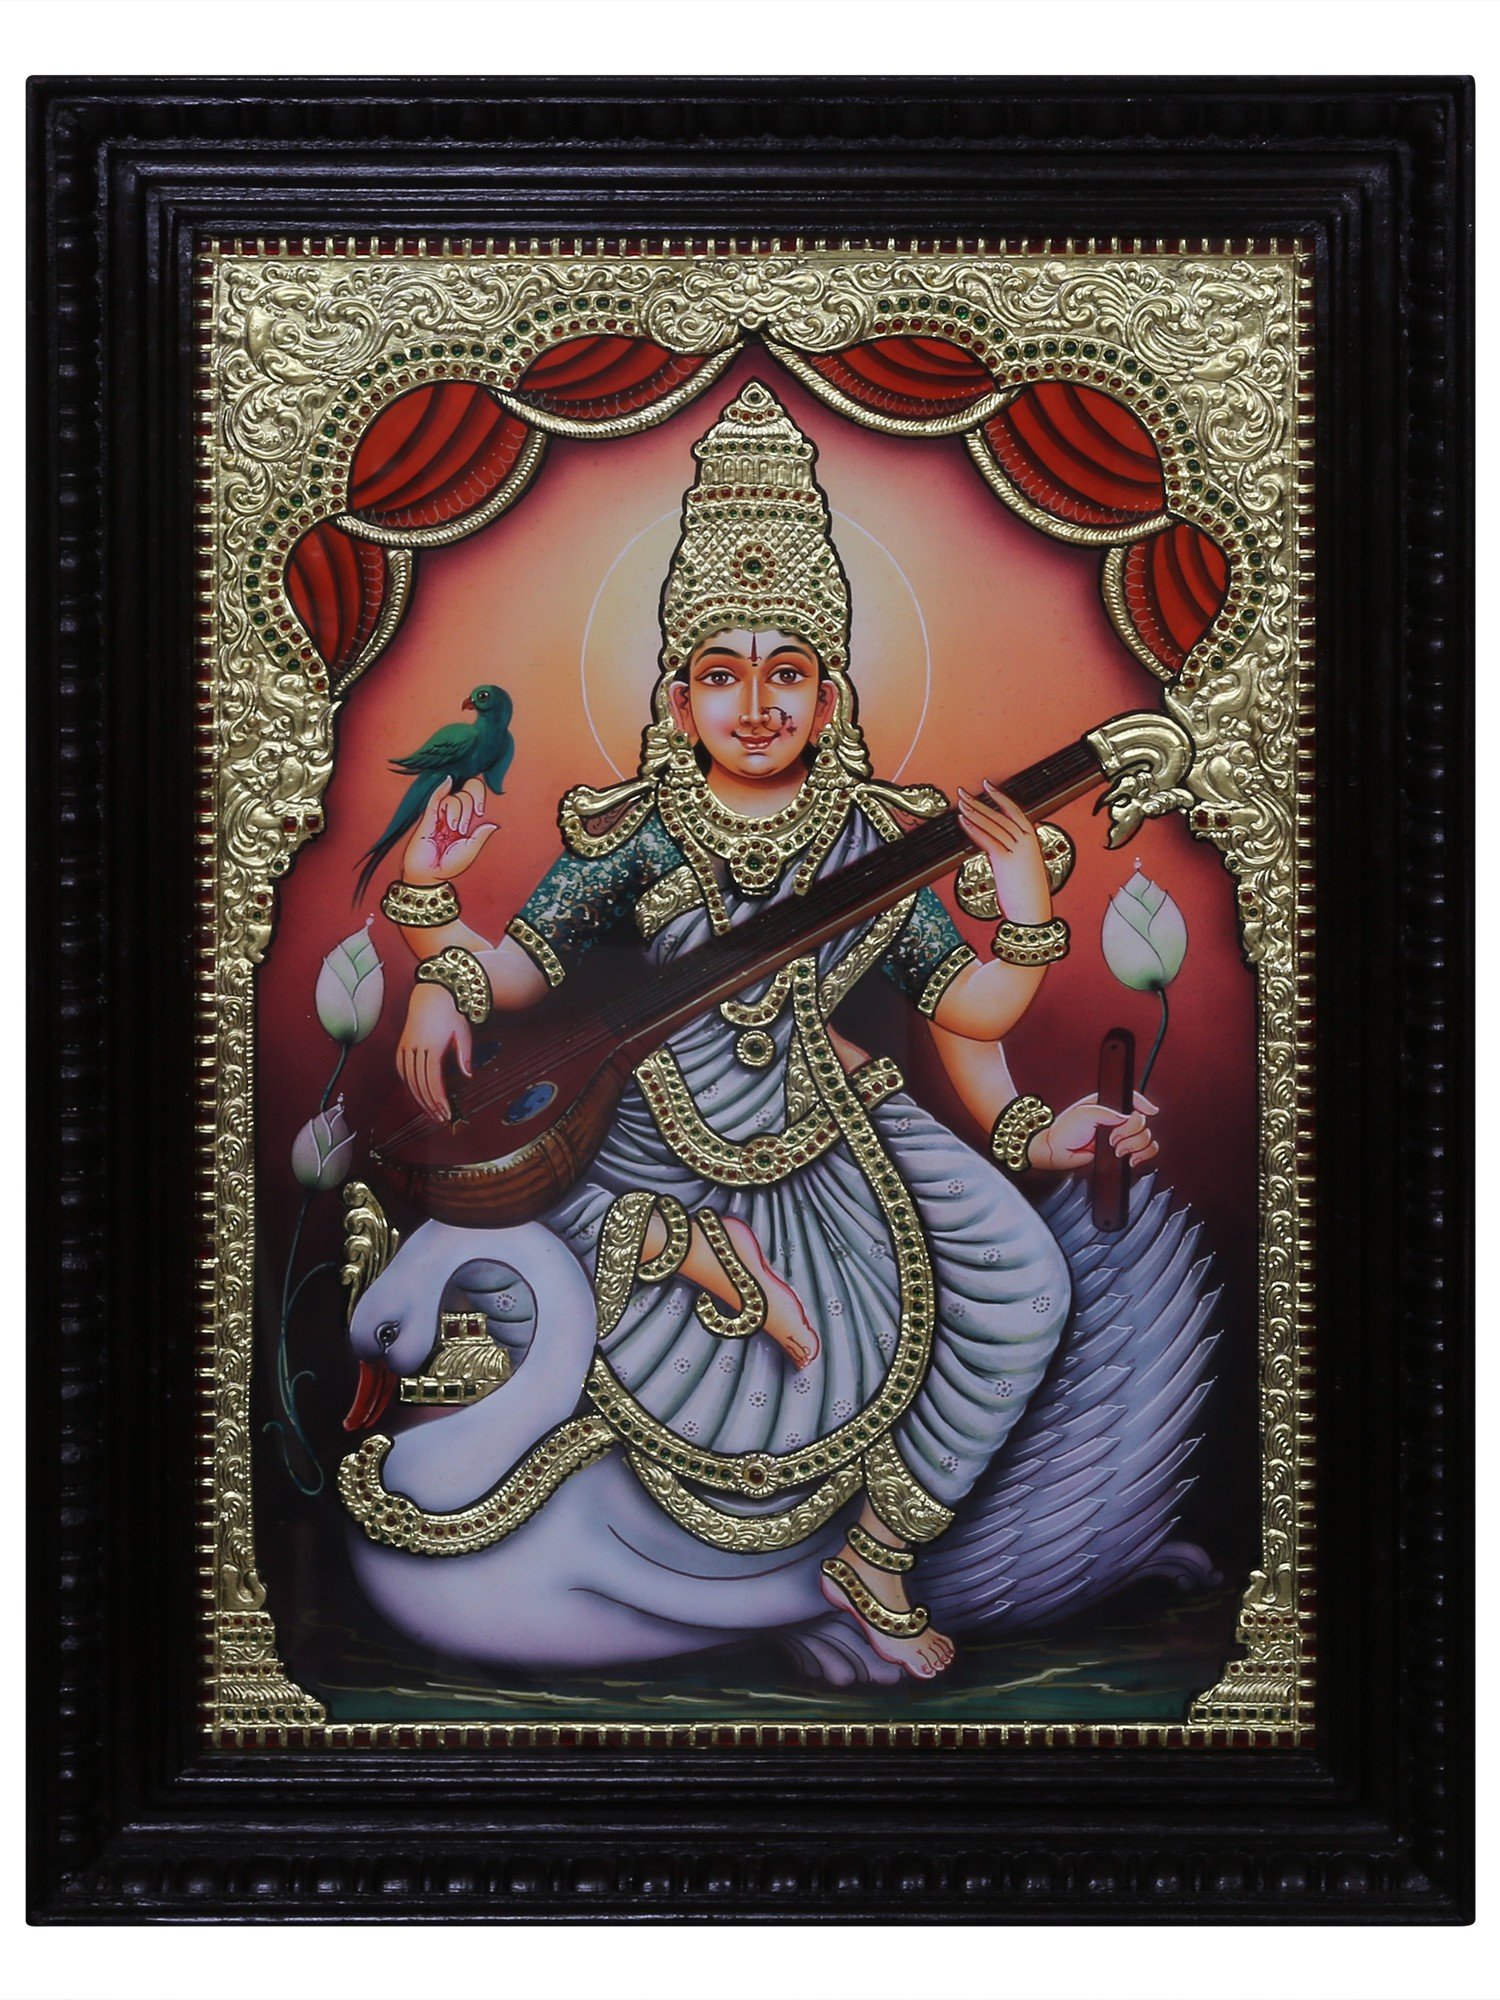 Goddess of Wisdom Music Art and Knowledge Maa Saraswati Stock Vector   Illustration of drawing celebration 170210385